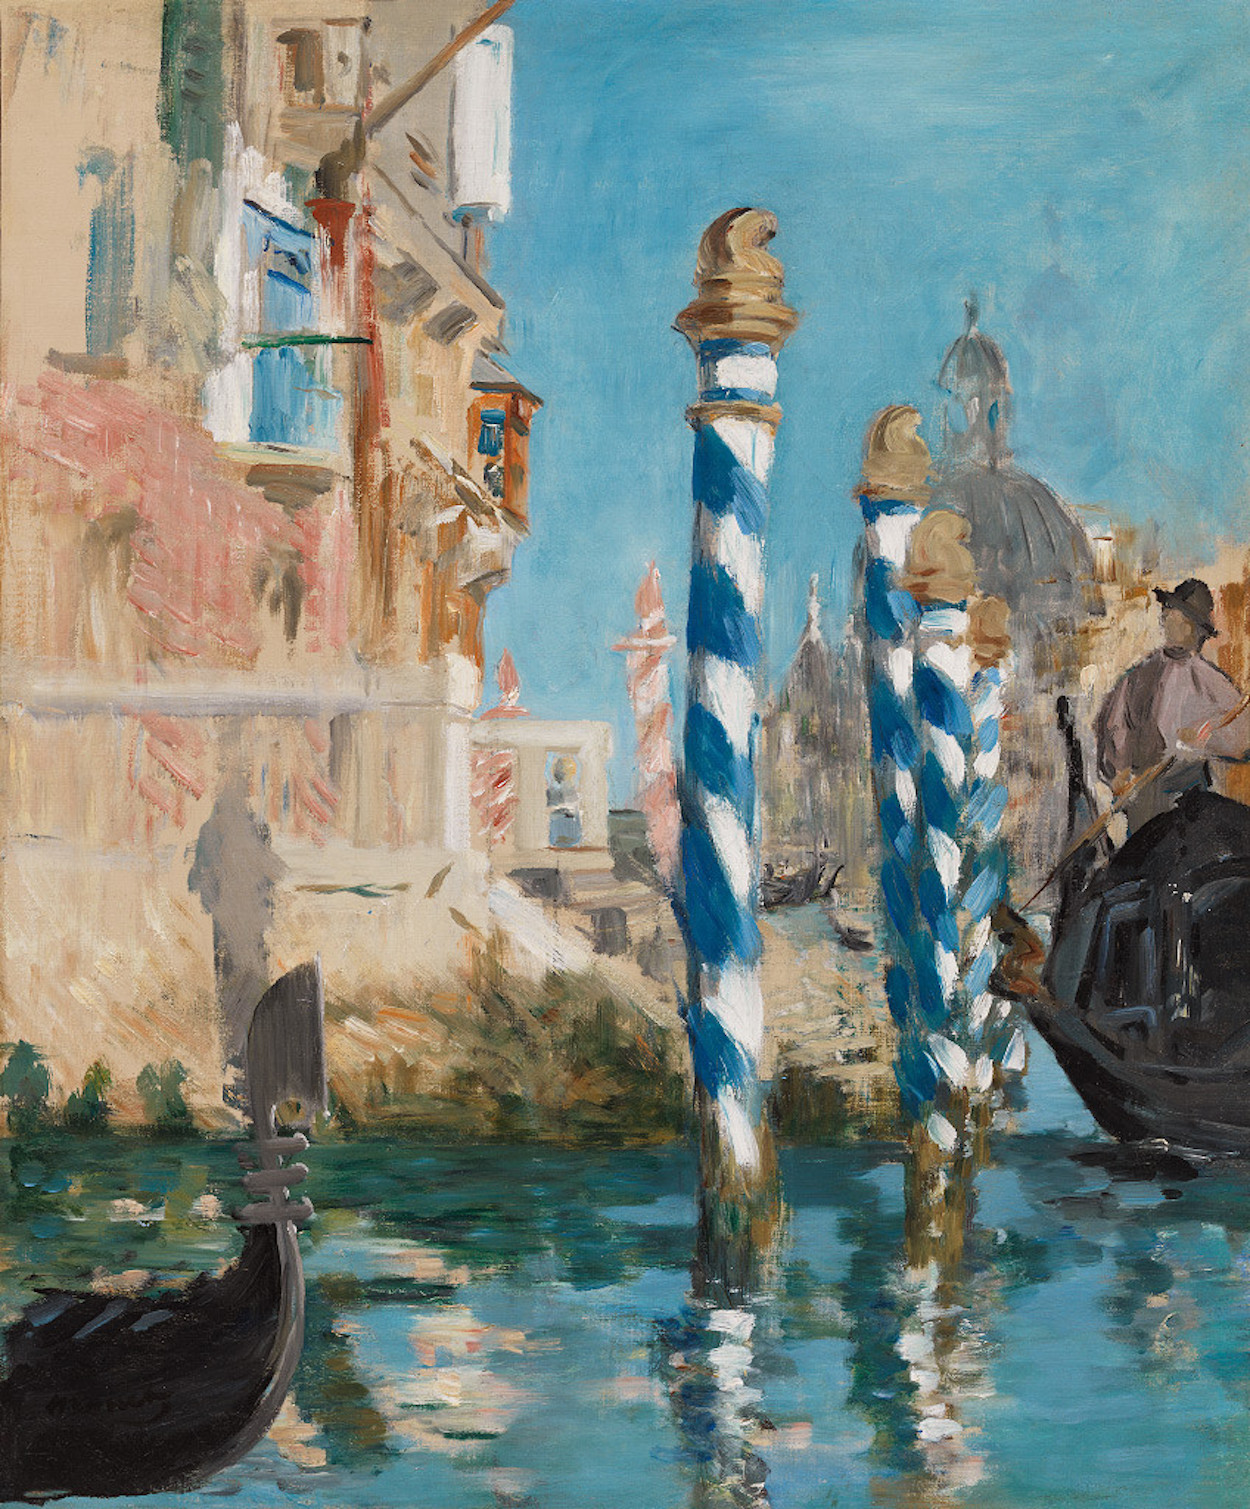 Venedik'te Manzara – Büyük Kanal by Édouard Manet - 1875 - 57 x 47,5 cm özel koleksiyon